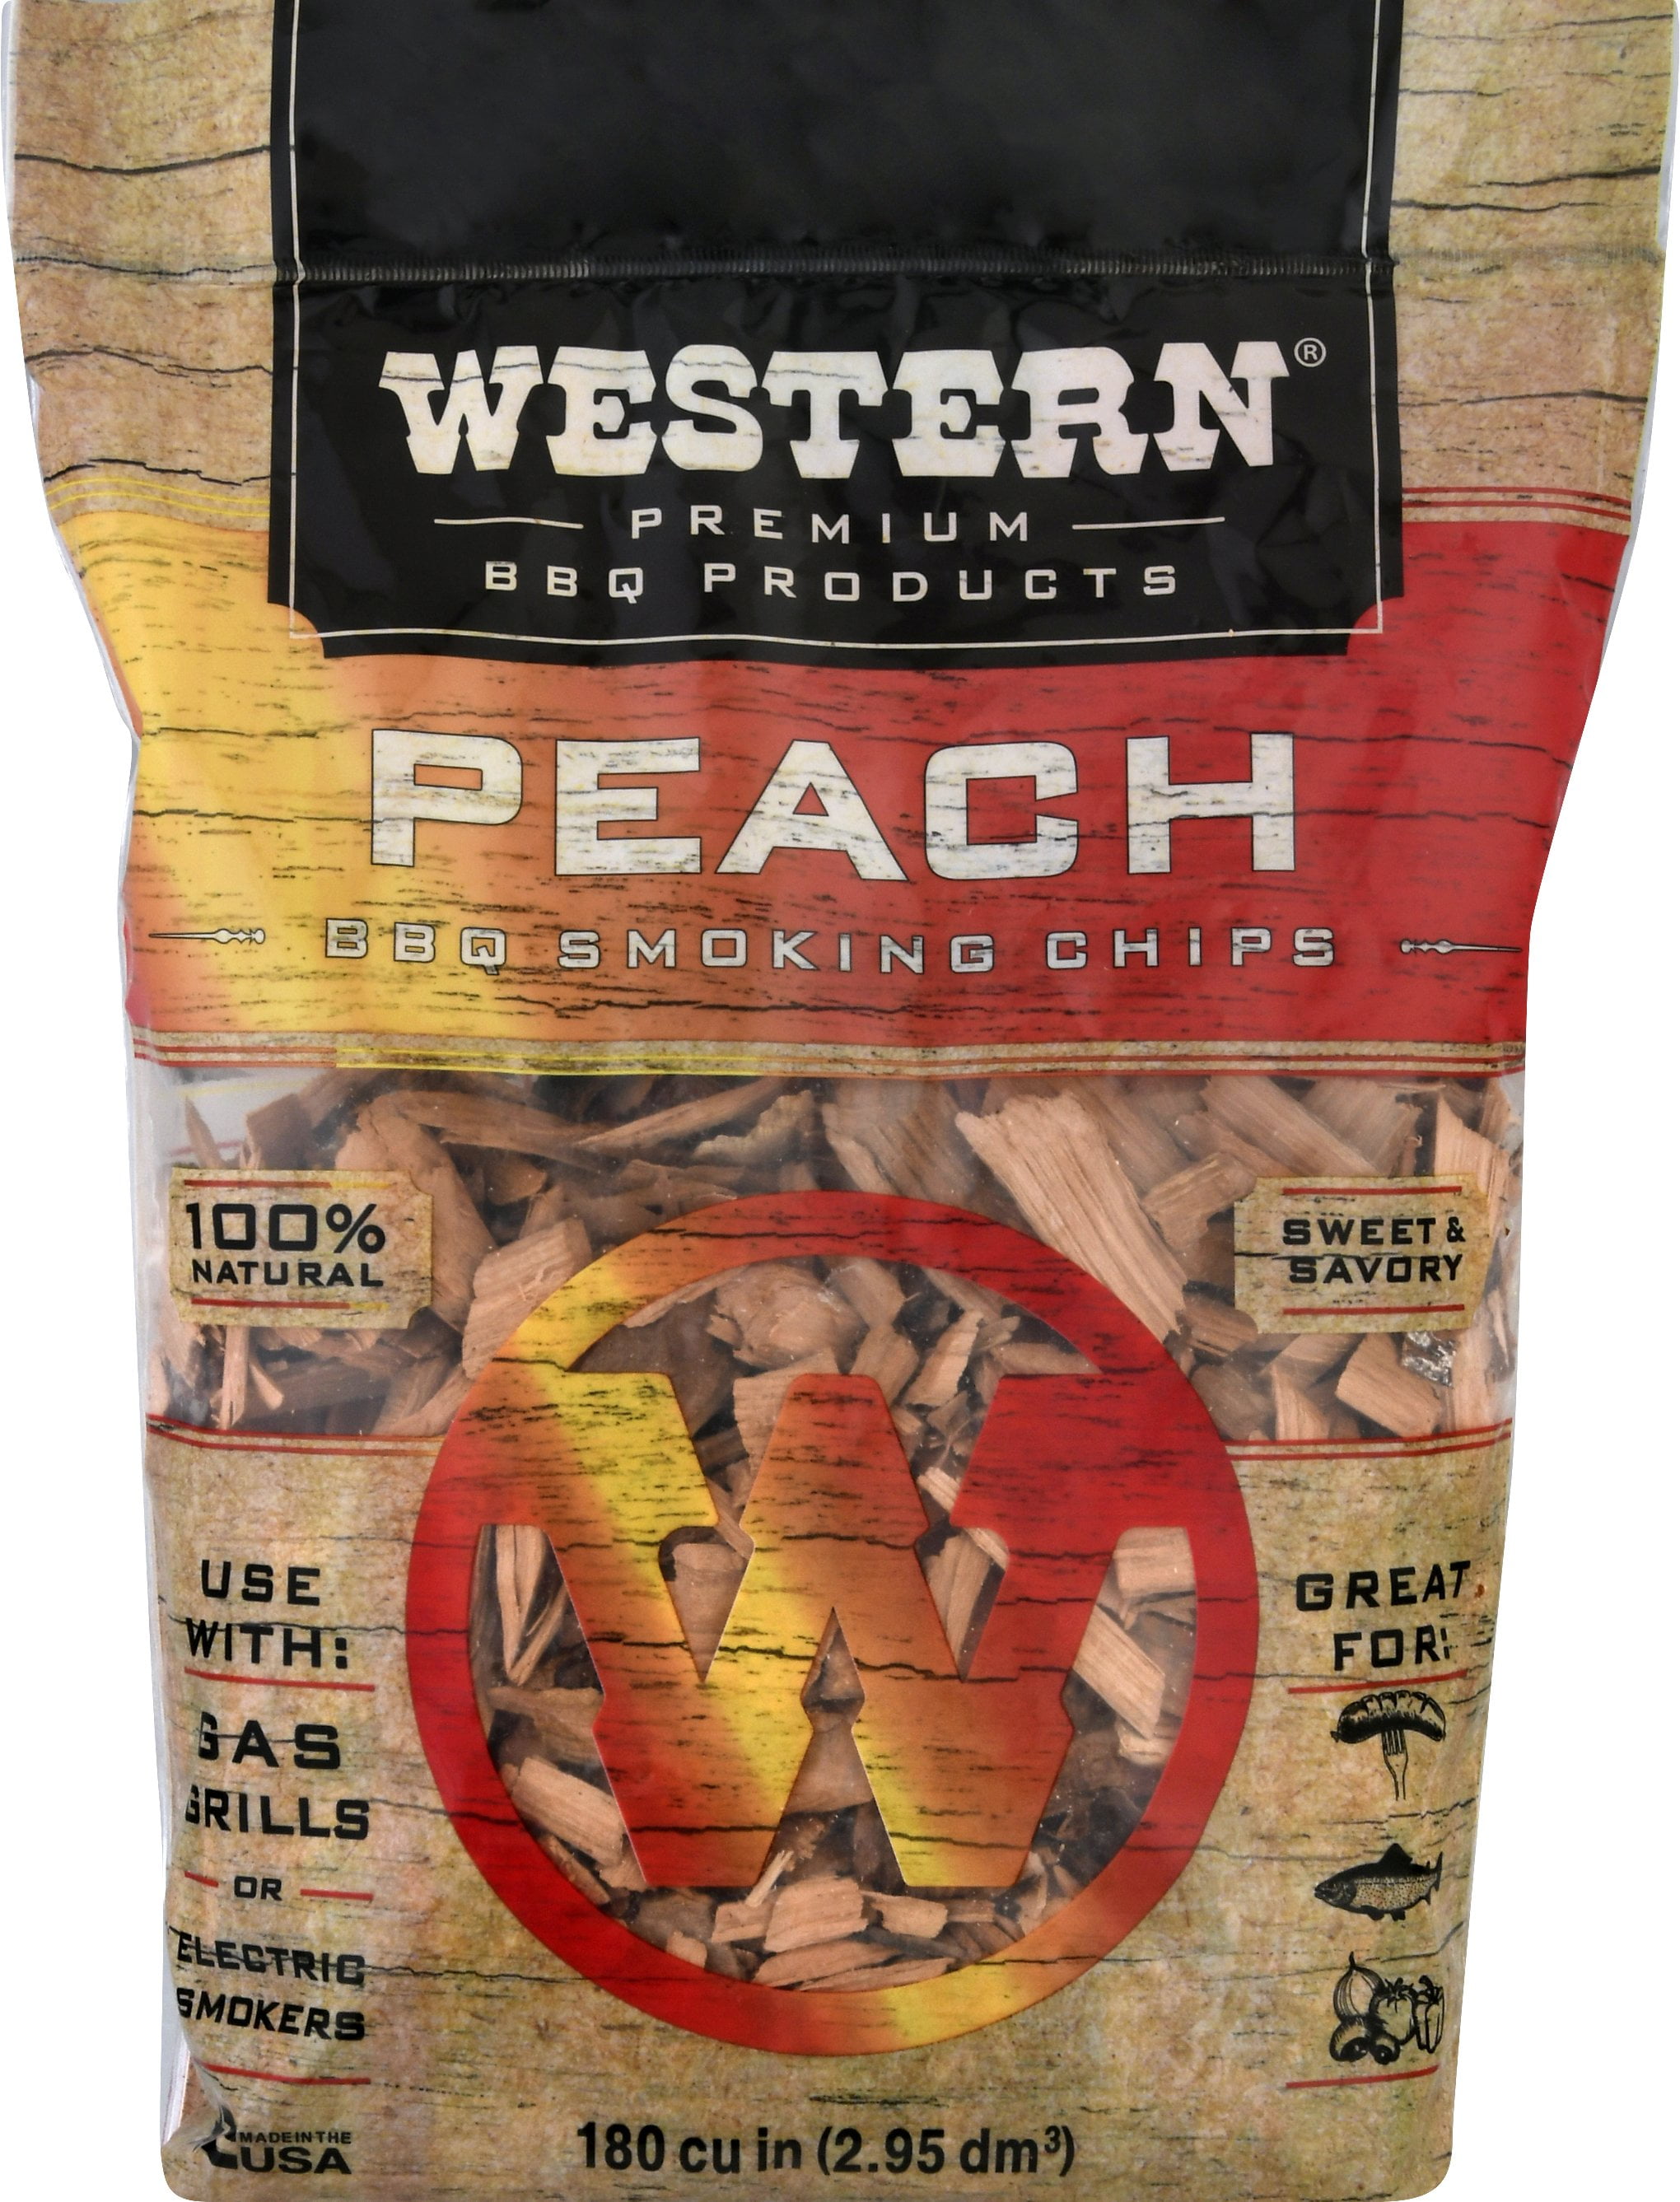 Western Premium BBQ Products Peach BBQ Smoking Chips 180 cu in 